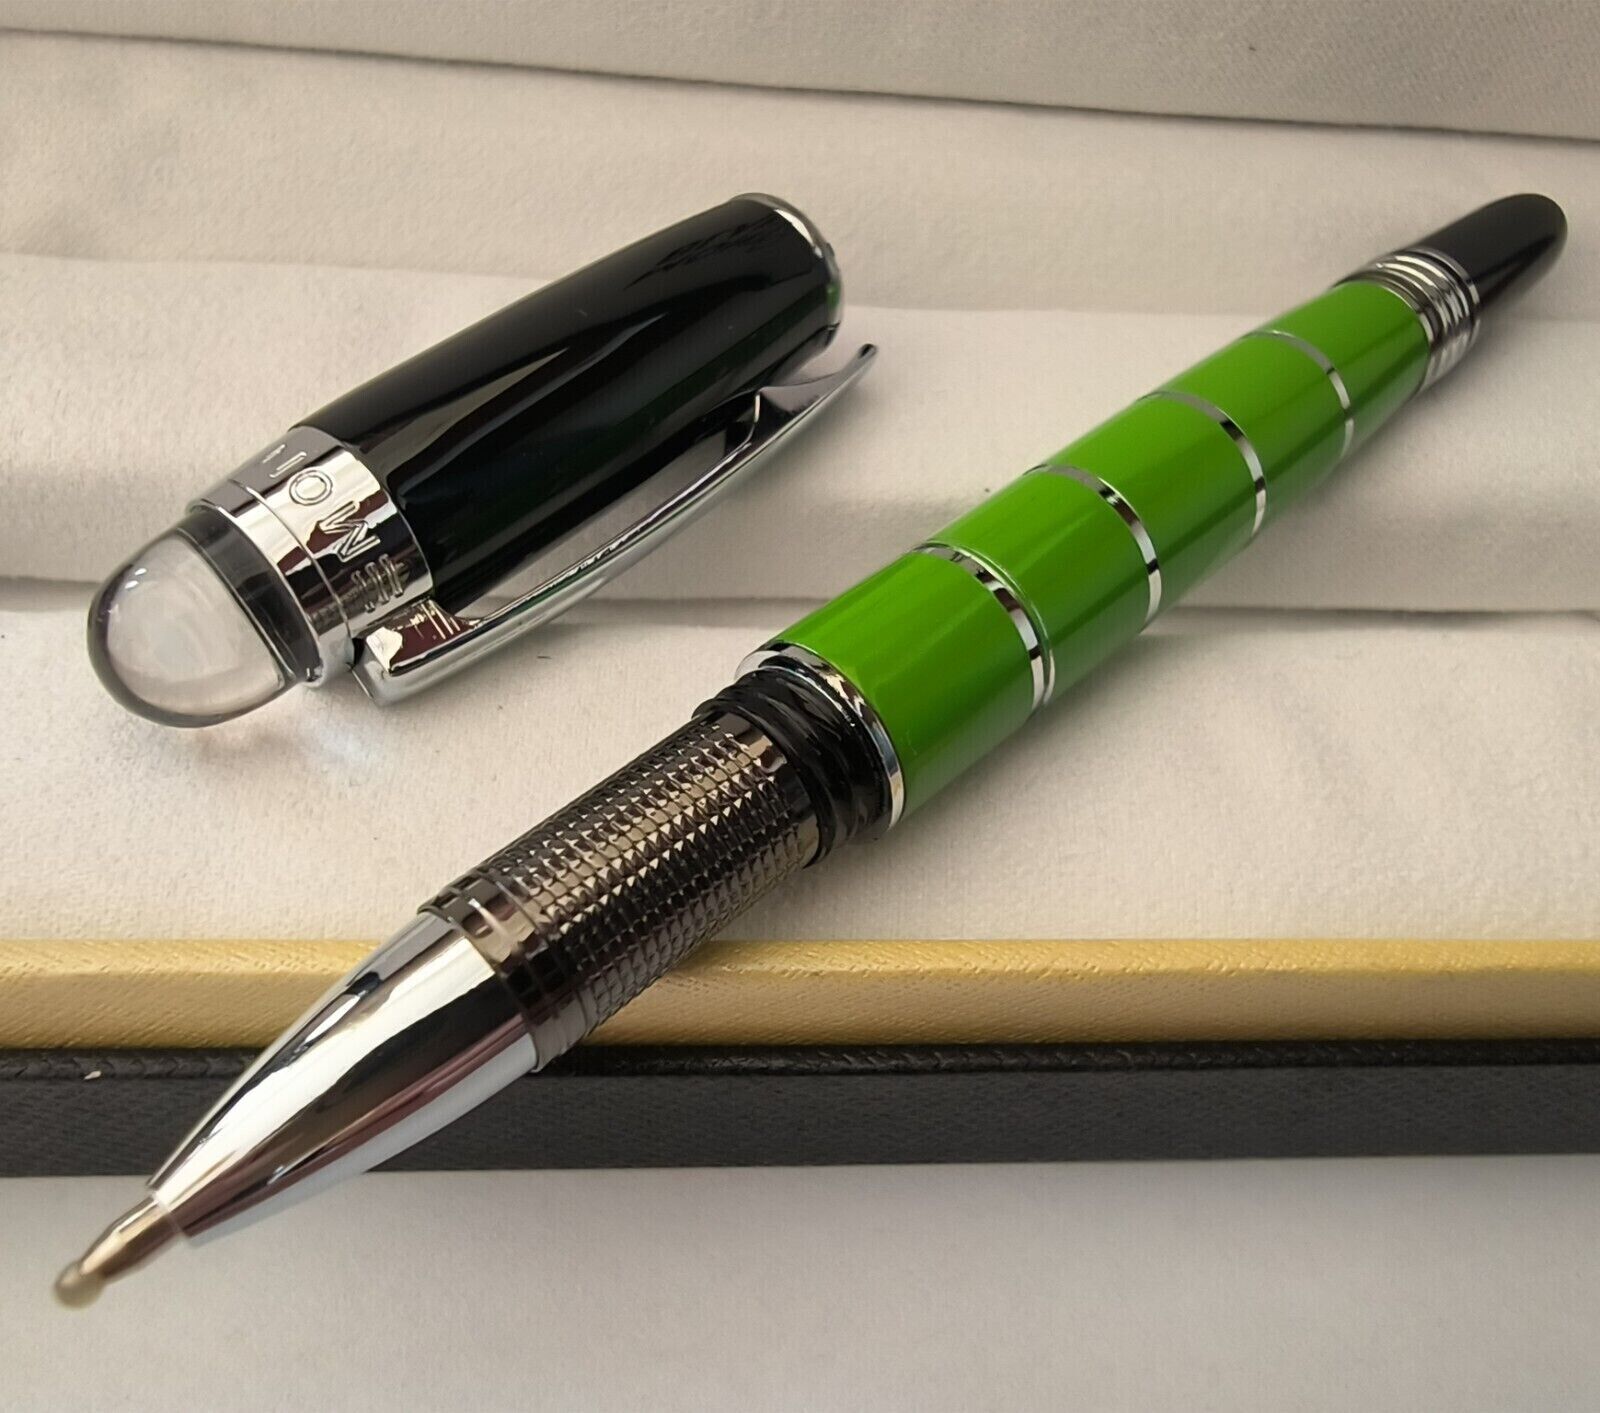 Luxury S.Walker Crystal Head Series Green Color 0.7mm Rollerball Pen #13